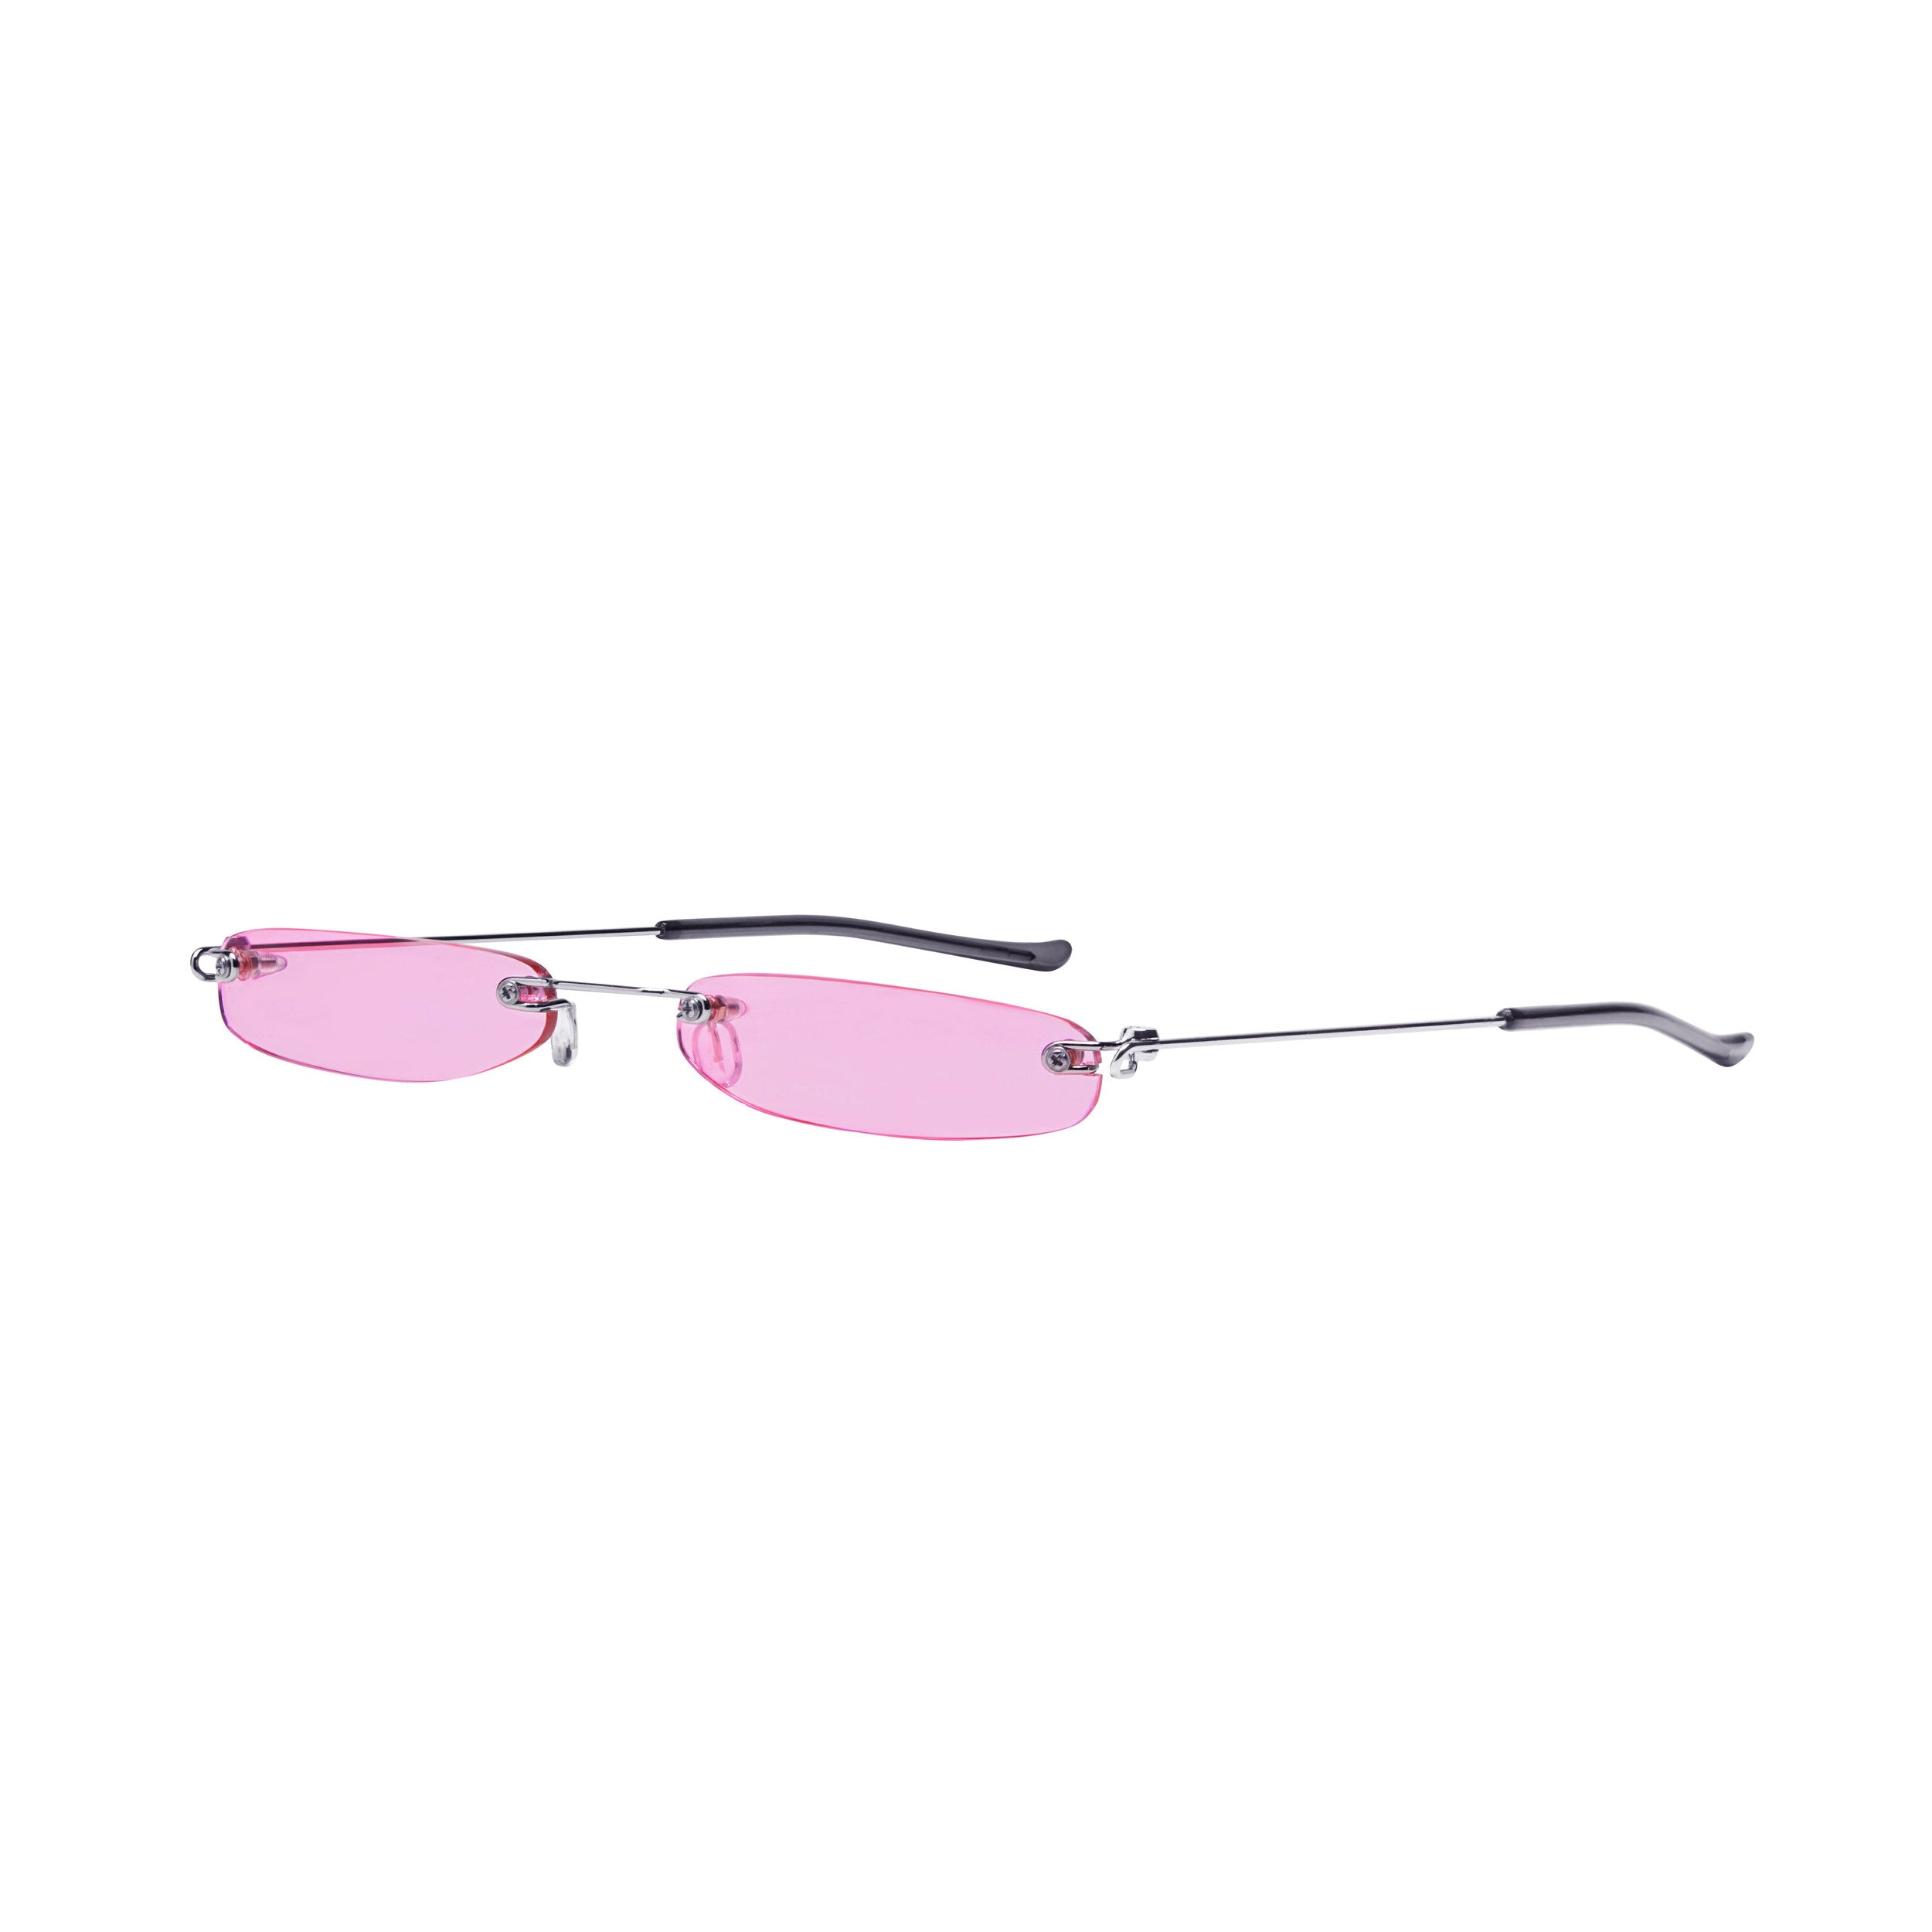 Christianah Jones Shady 1.0 Pink Sunglasses / Pink Lenses